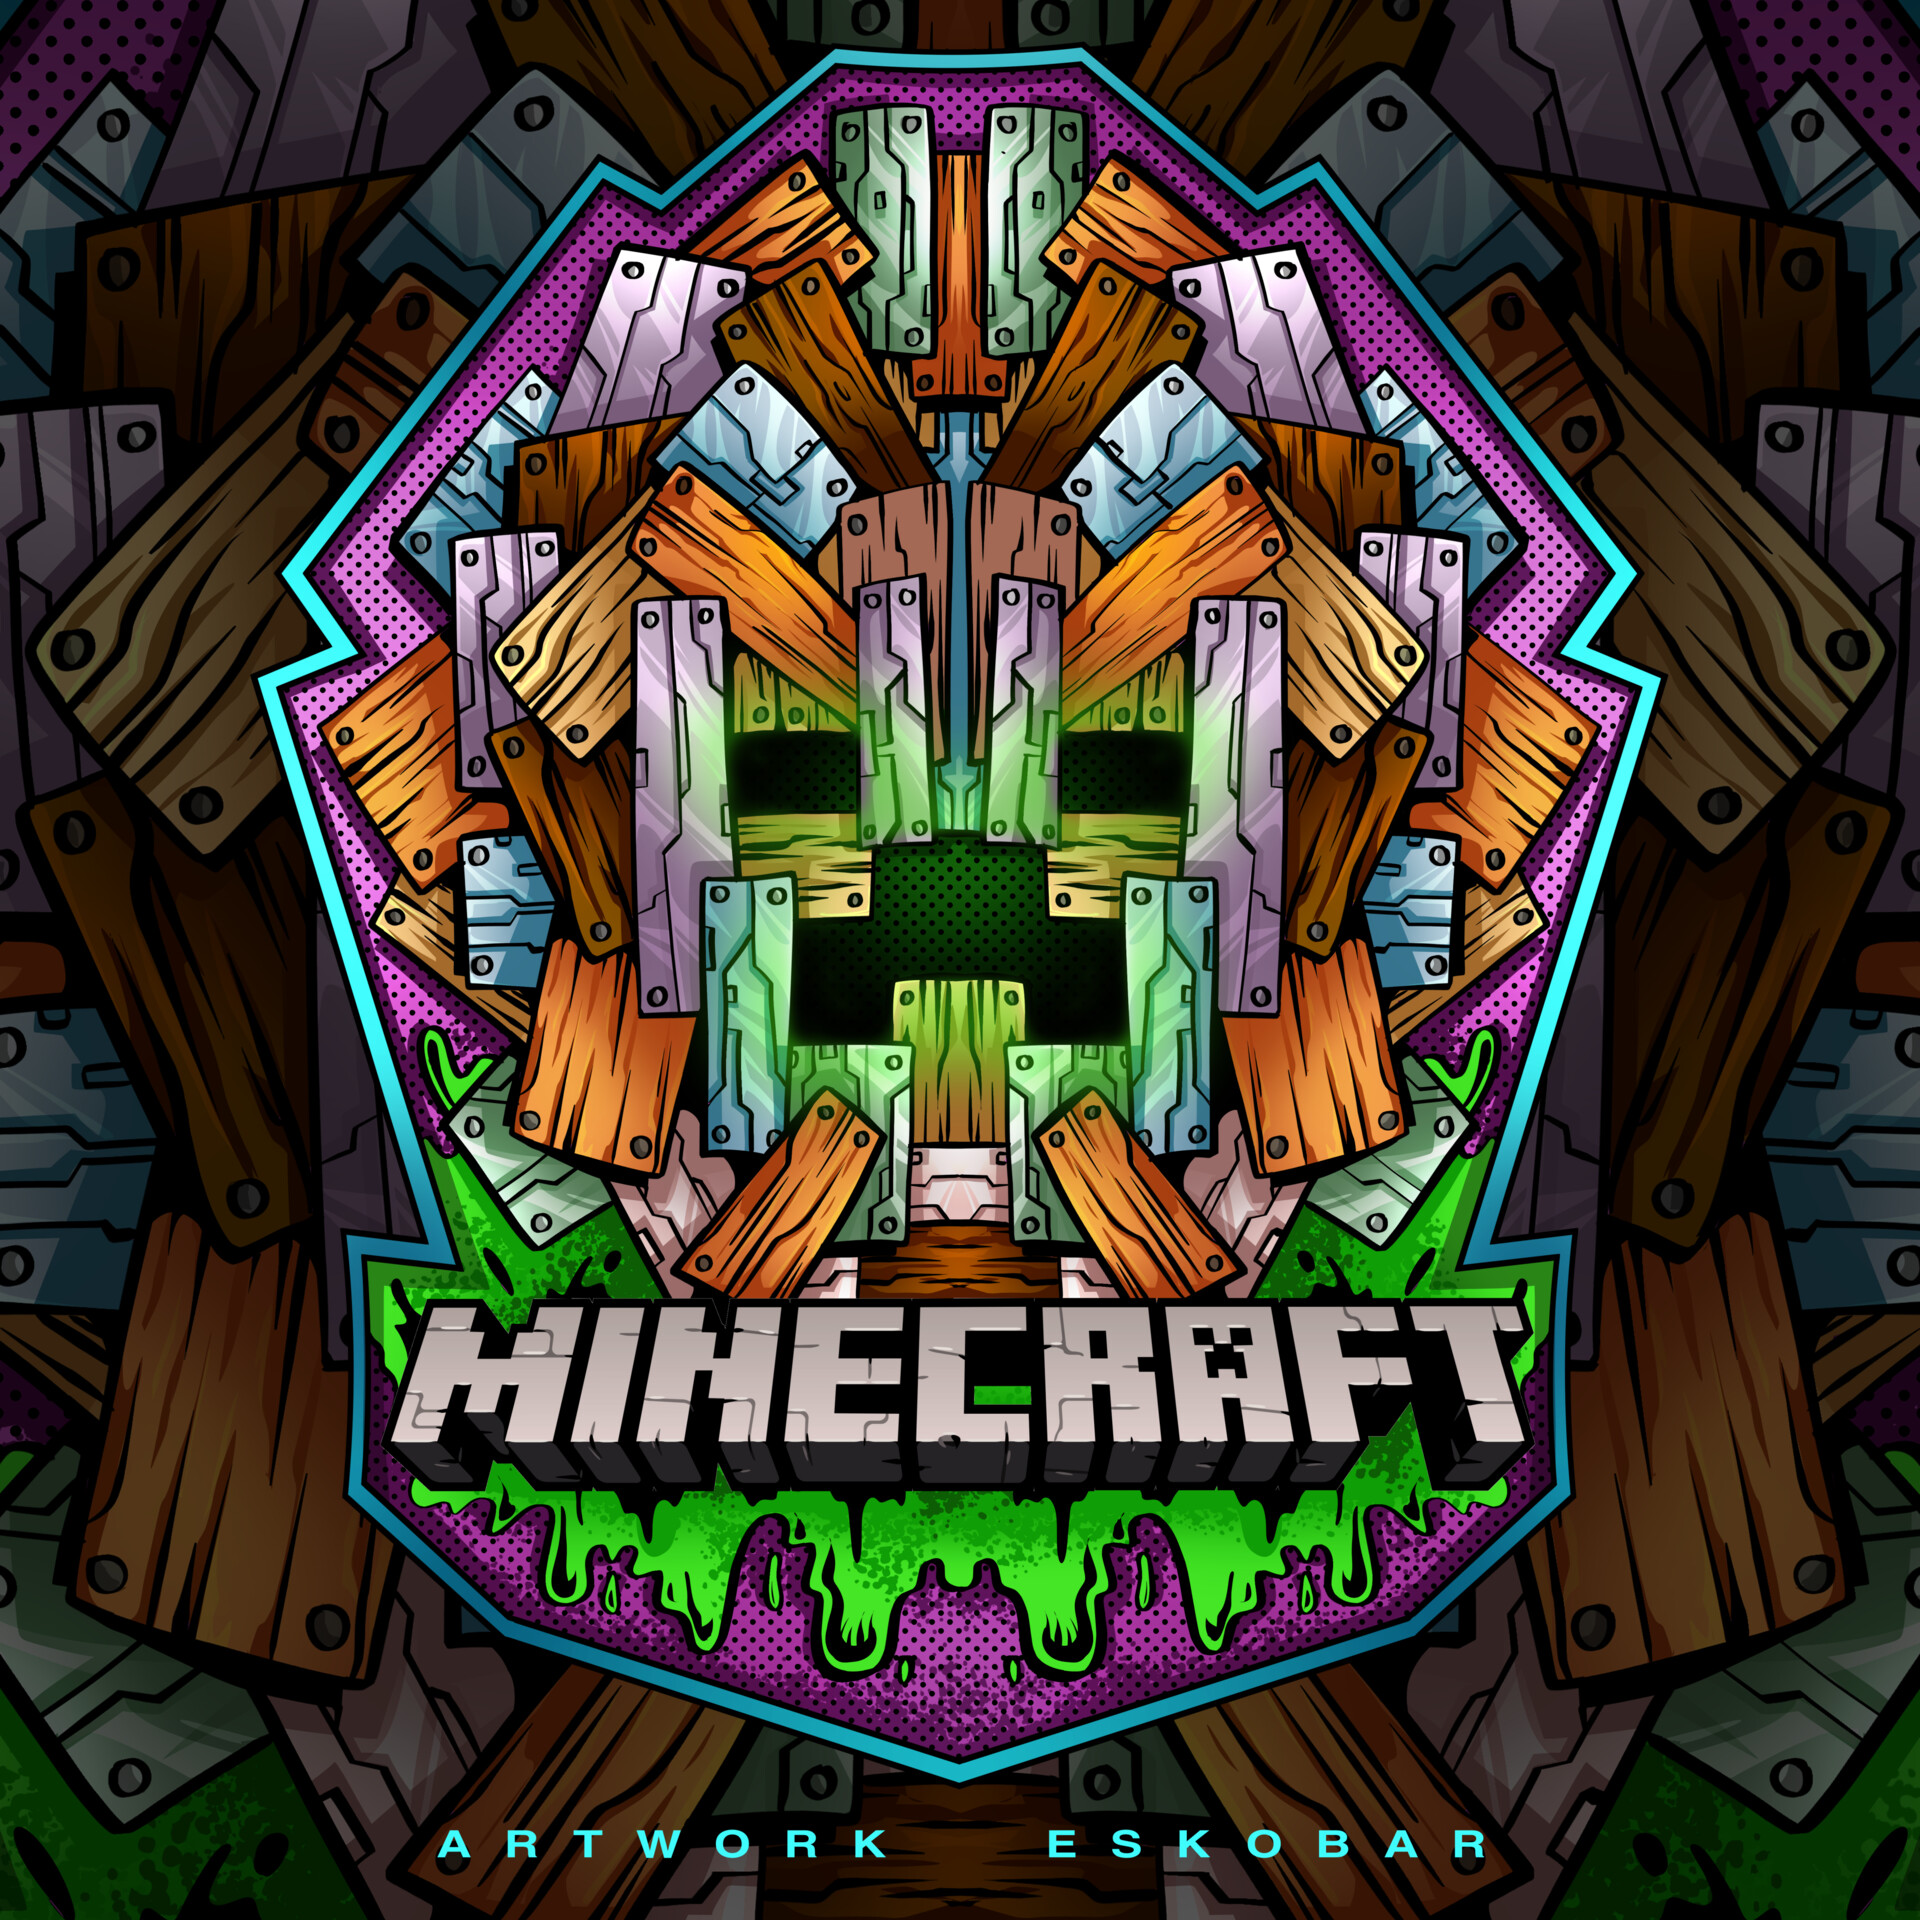 ArtStation - [FANMADE] Planet Minecraft Logo Remake